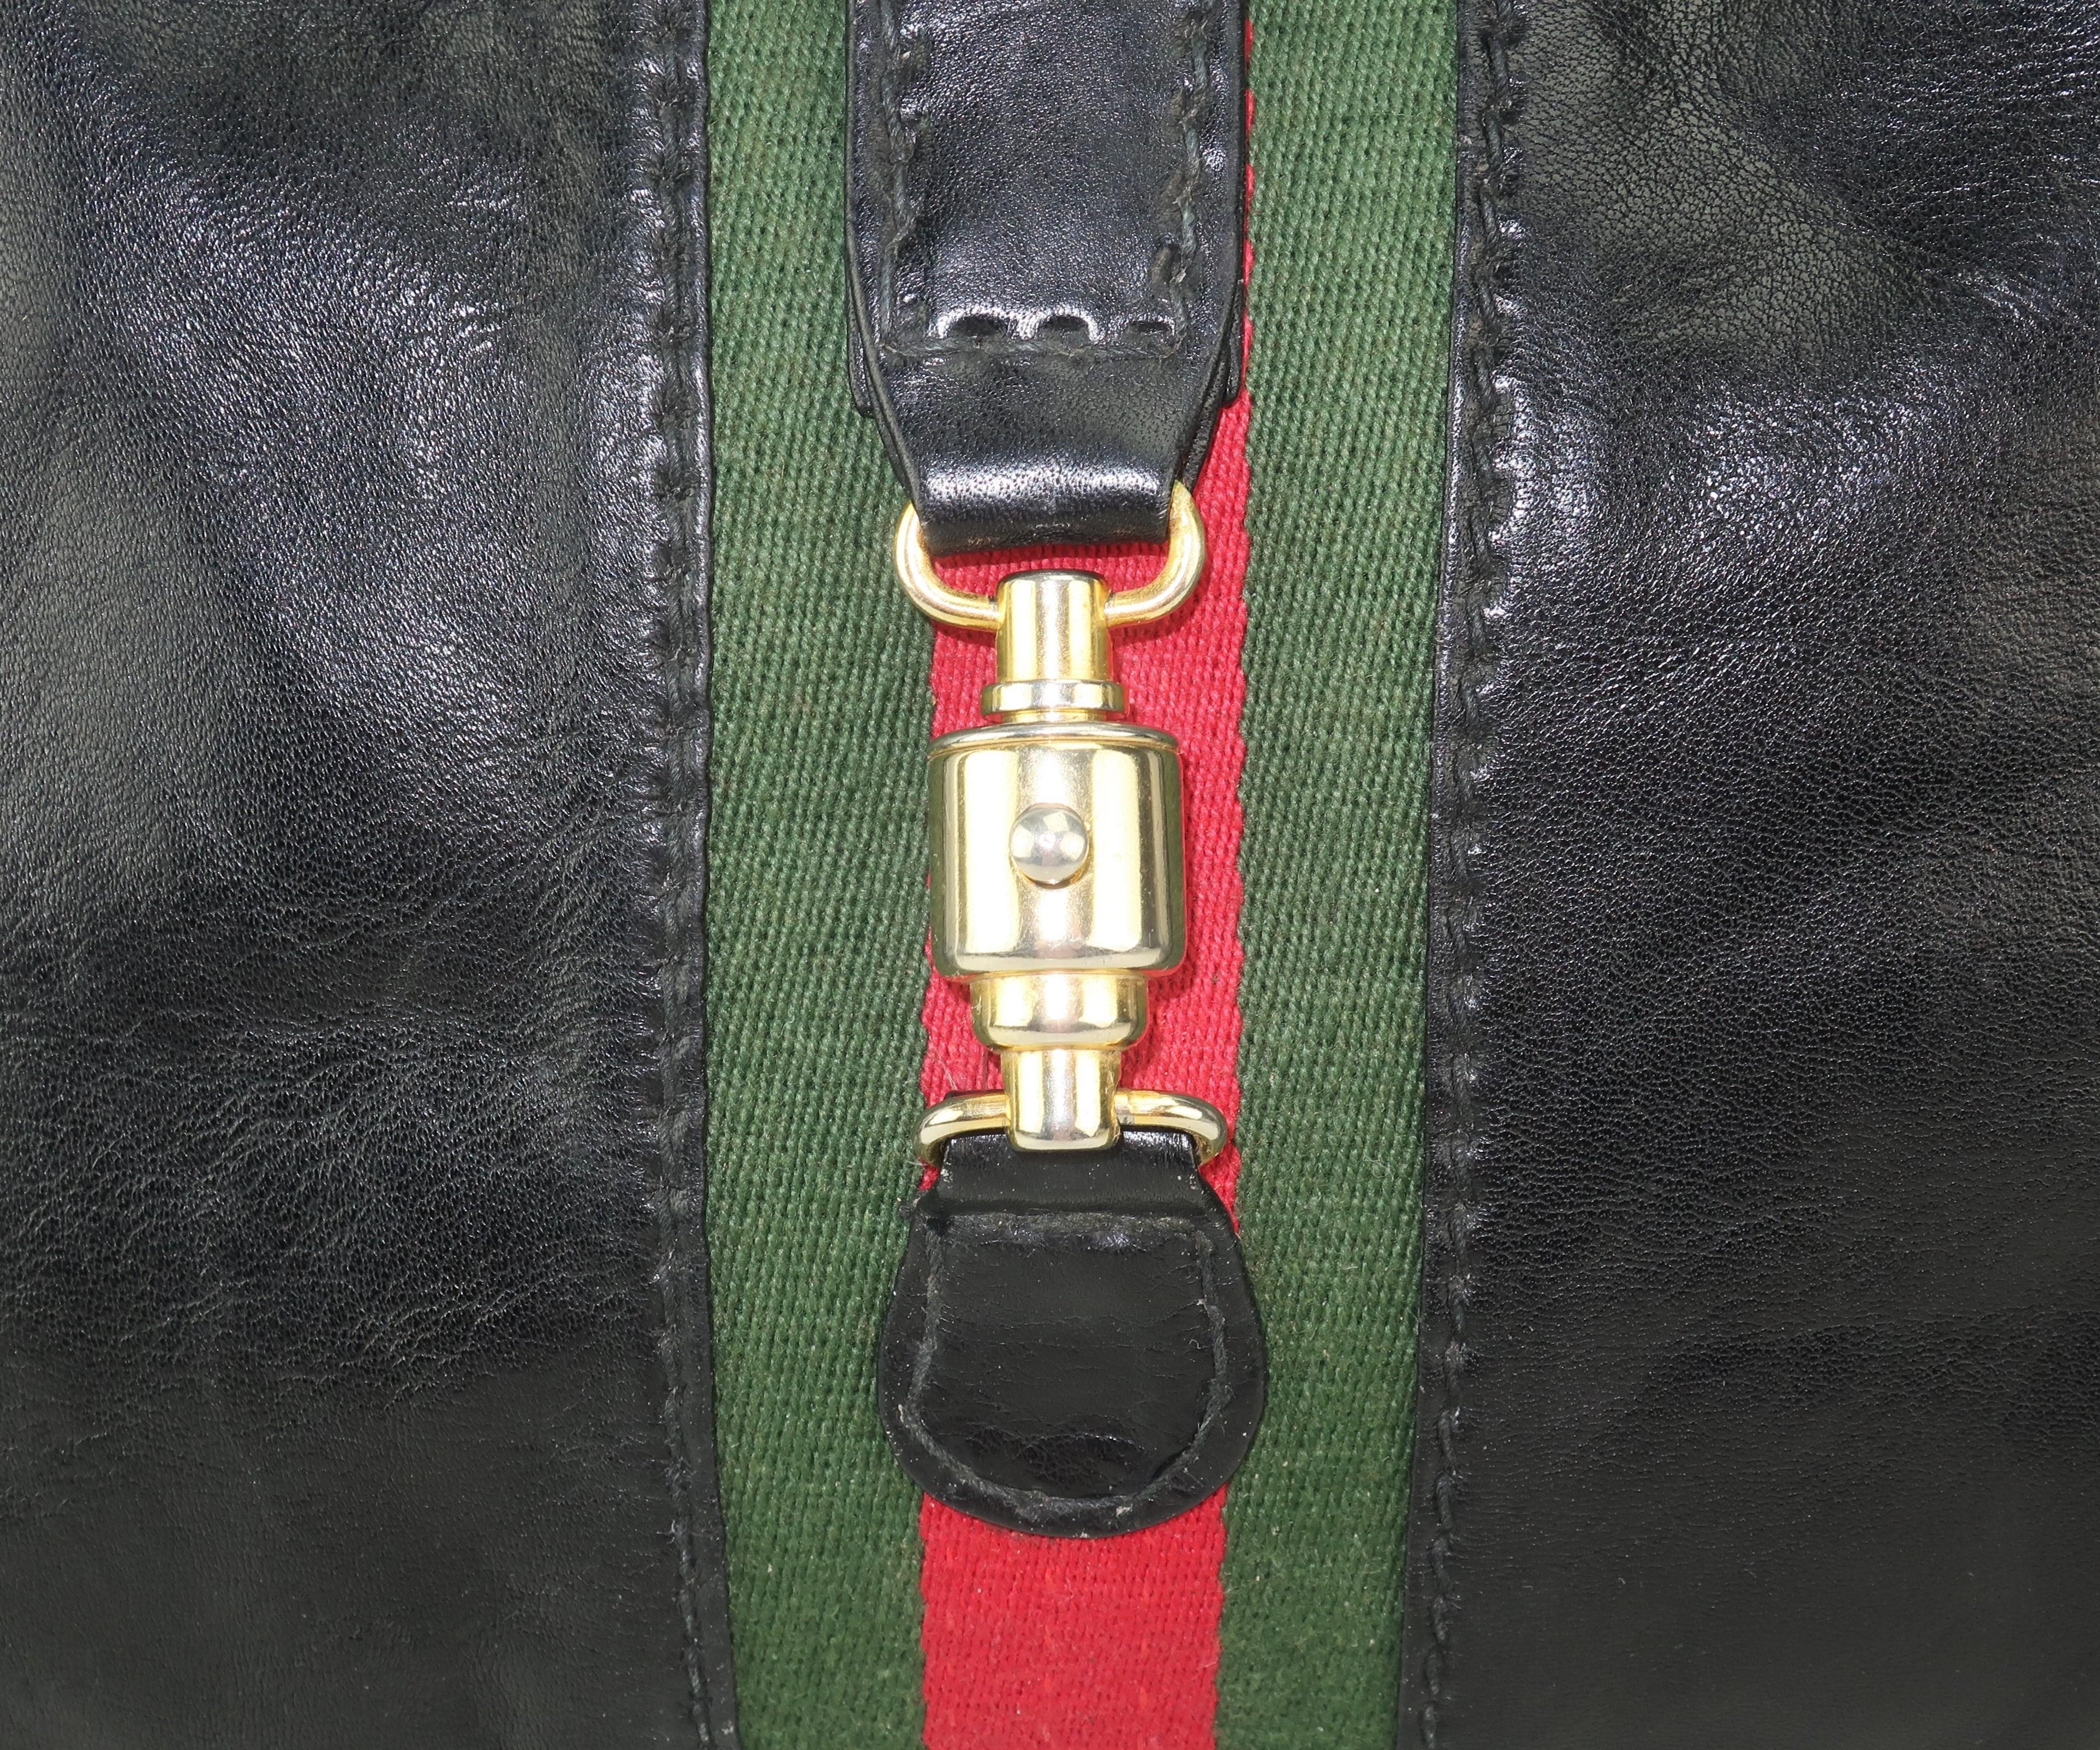 equestrian style purses